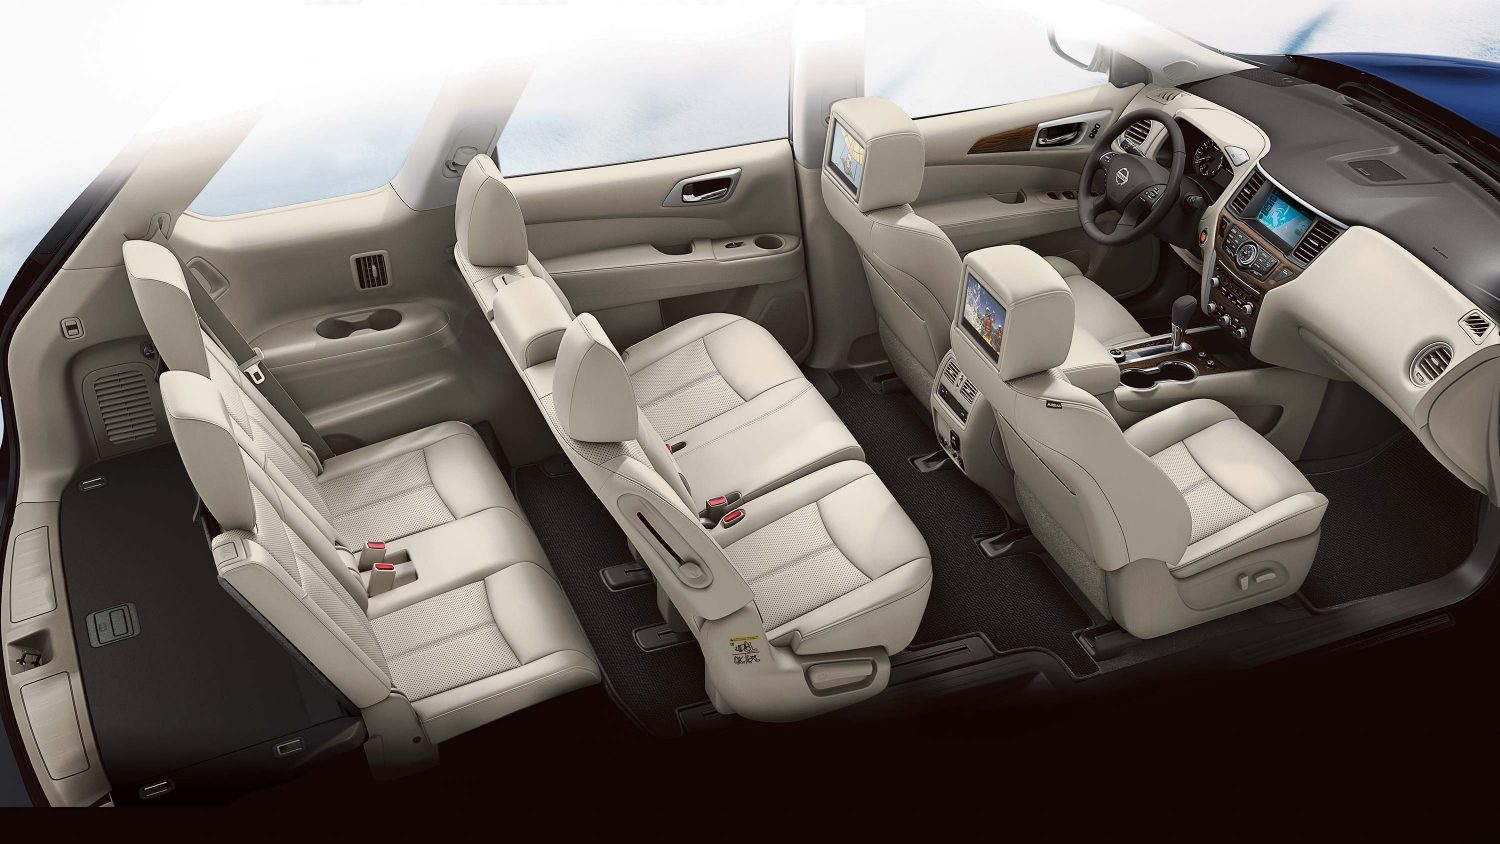 Nissan Pathfinder three rows of seating